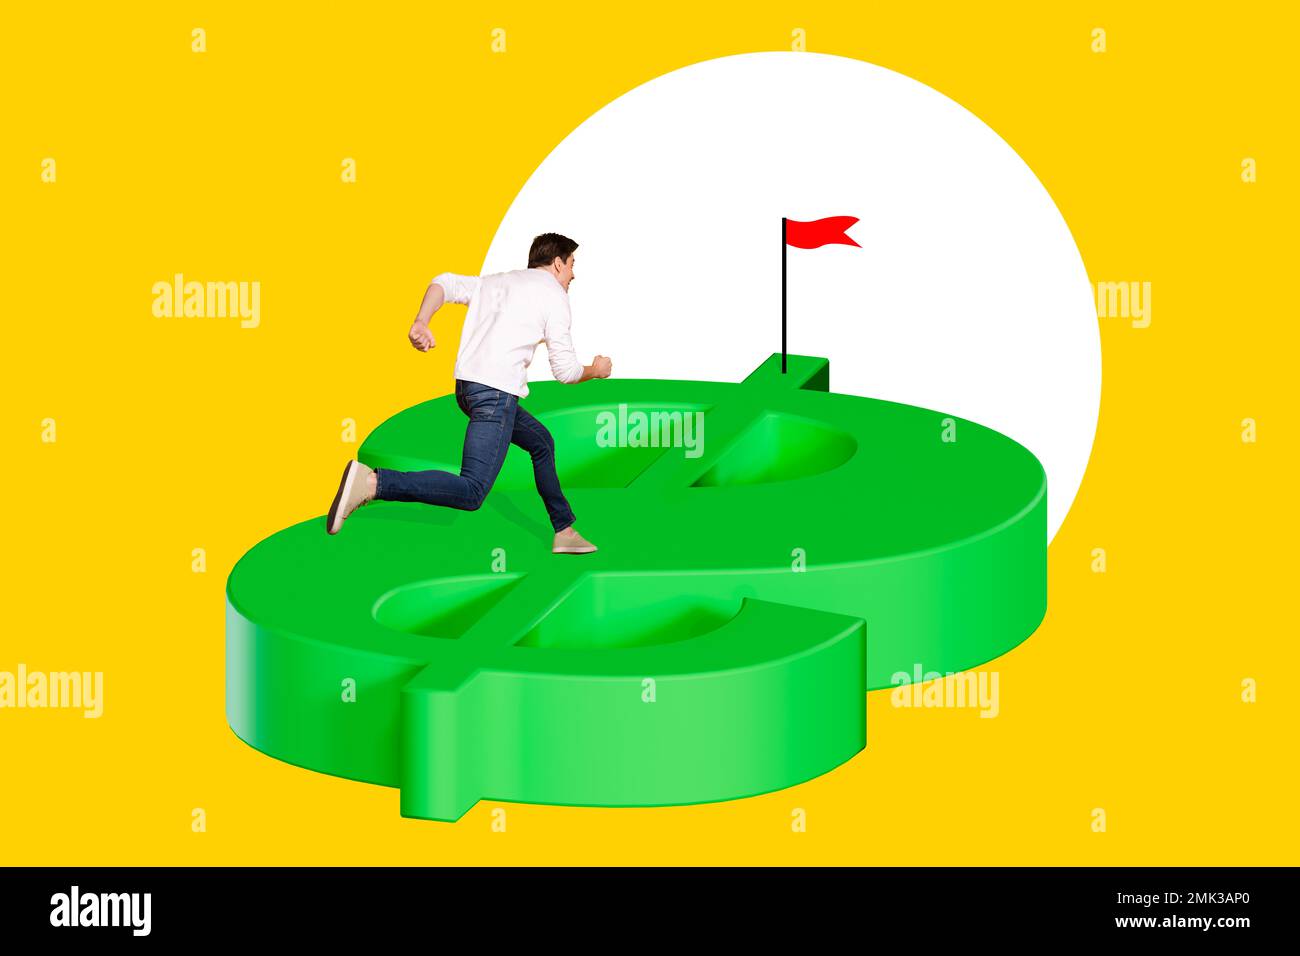 Creative collage image of mini guy hurry rush running huge dollar symbol finish target flag isolated on yellow background Stock Photo